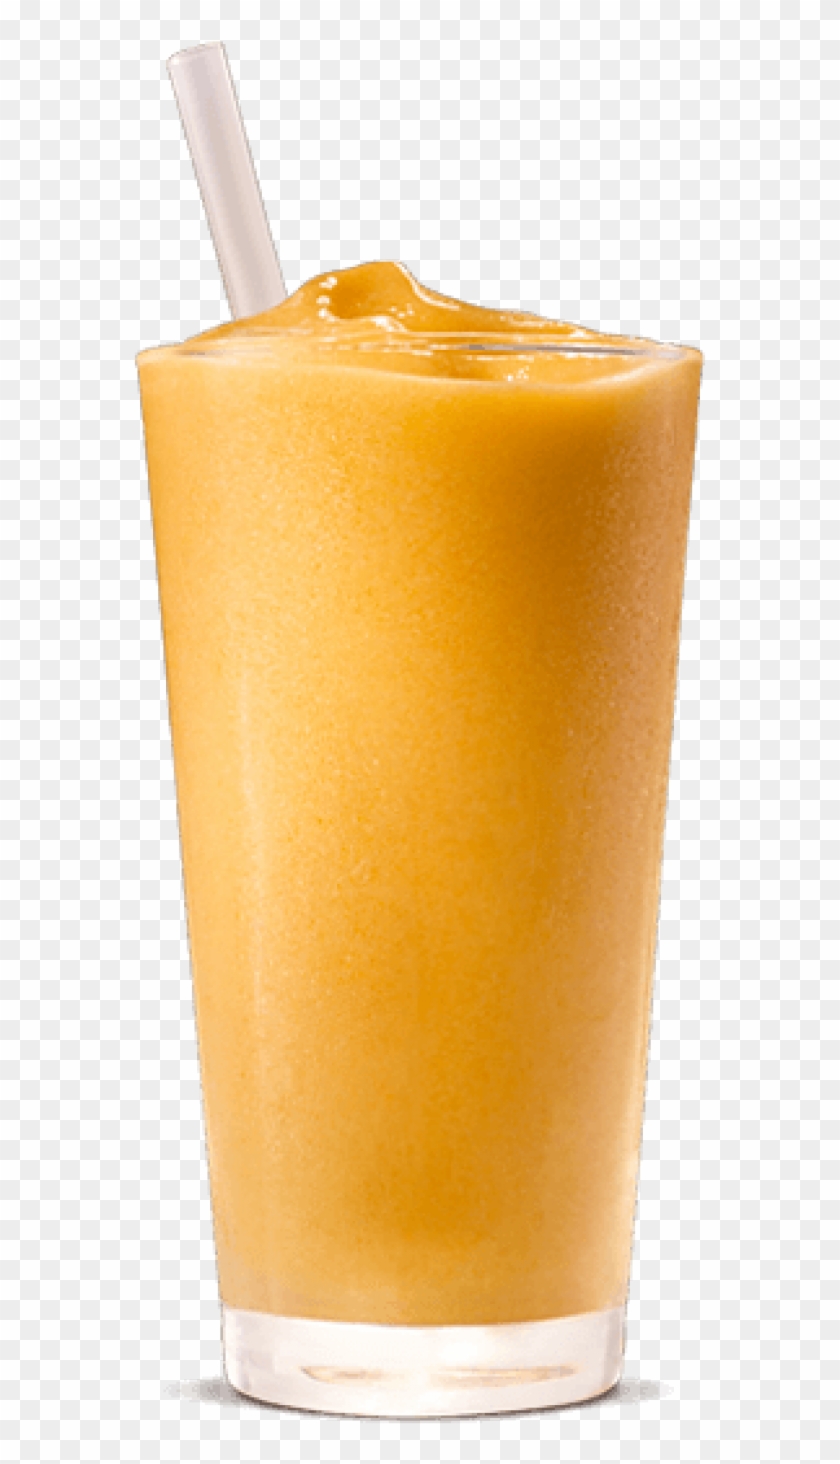 Ice Cream Milkshake Smoothie Juice Mango - Mango Milkshake Png #753643